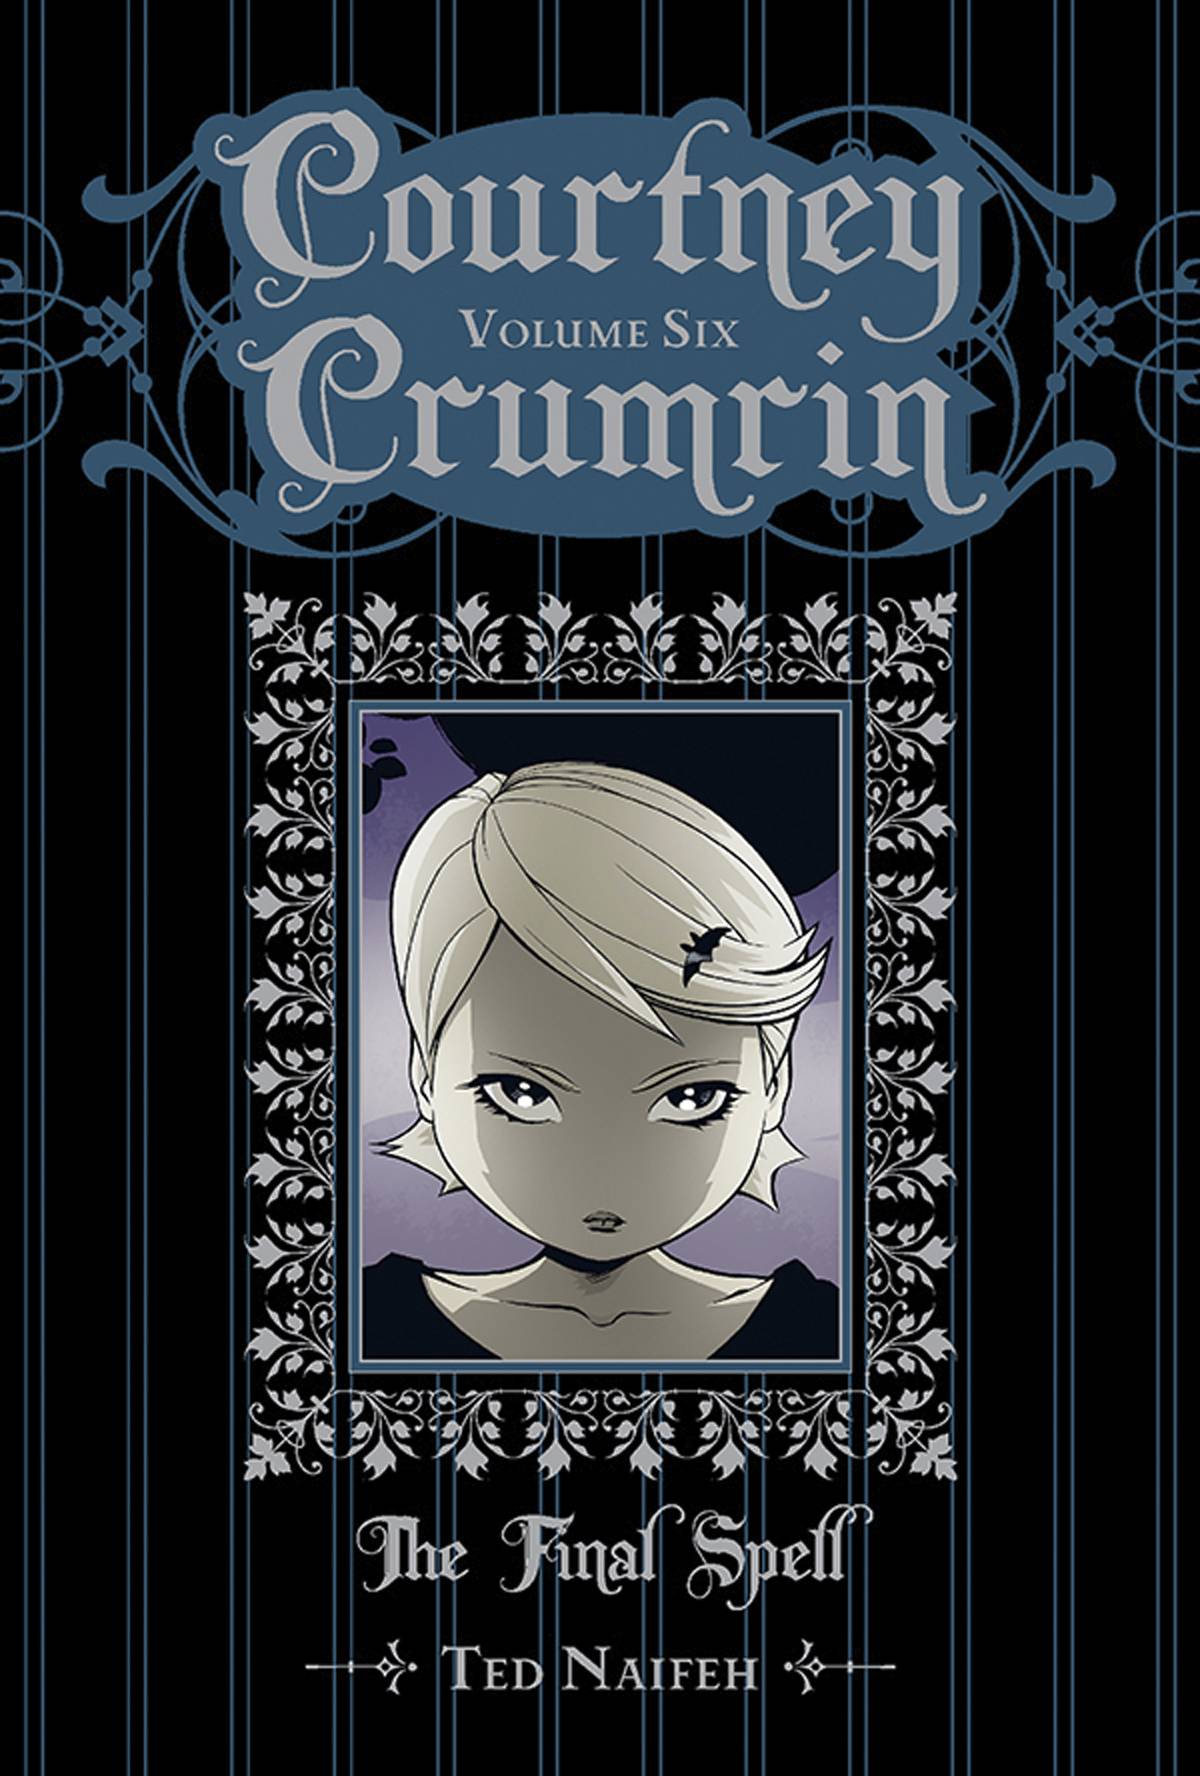 Courtney Crumrin Vol. 6 HC